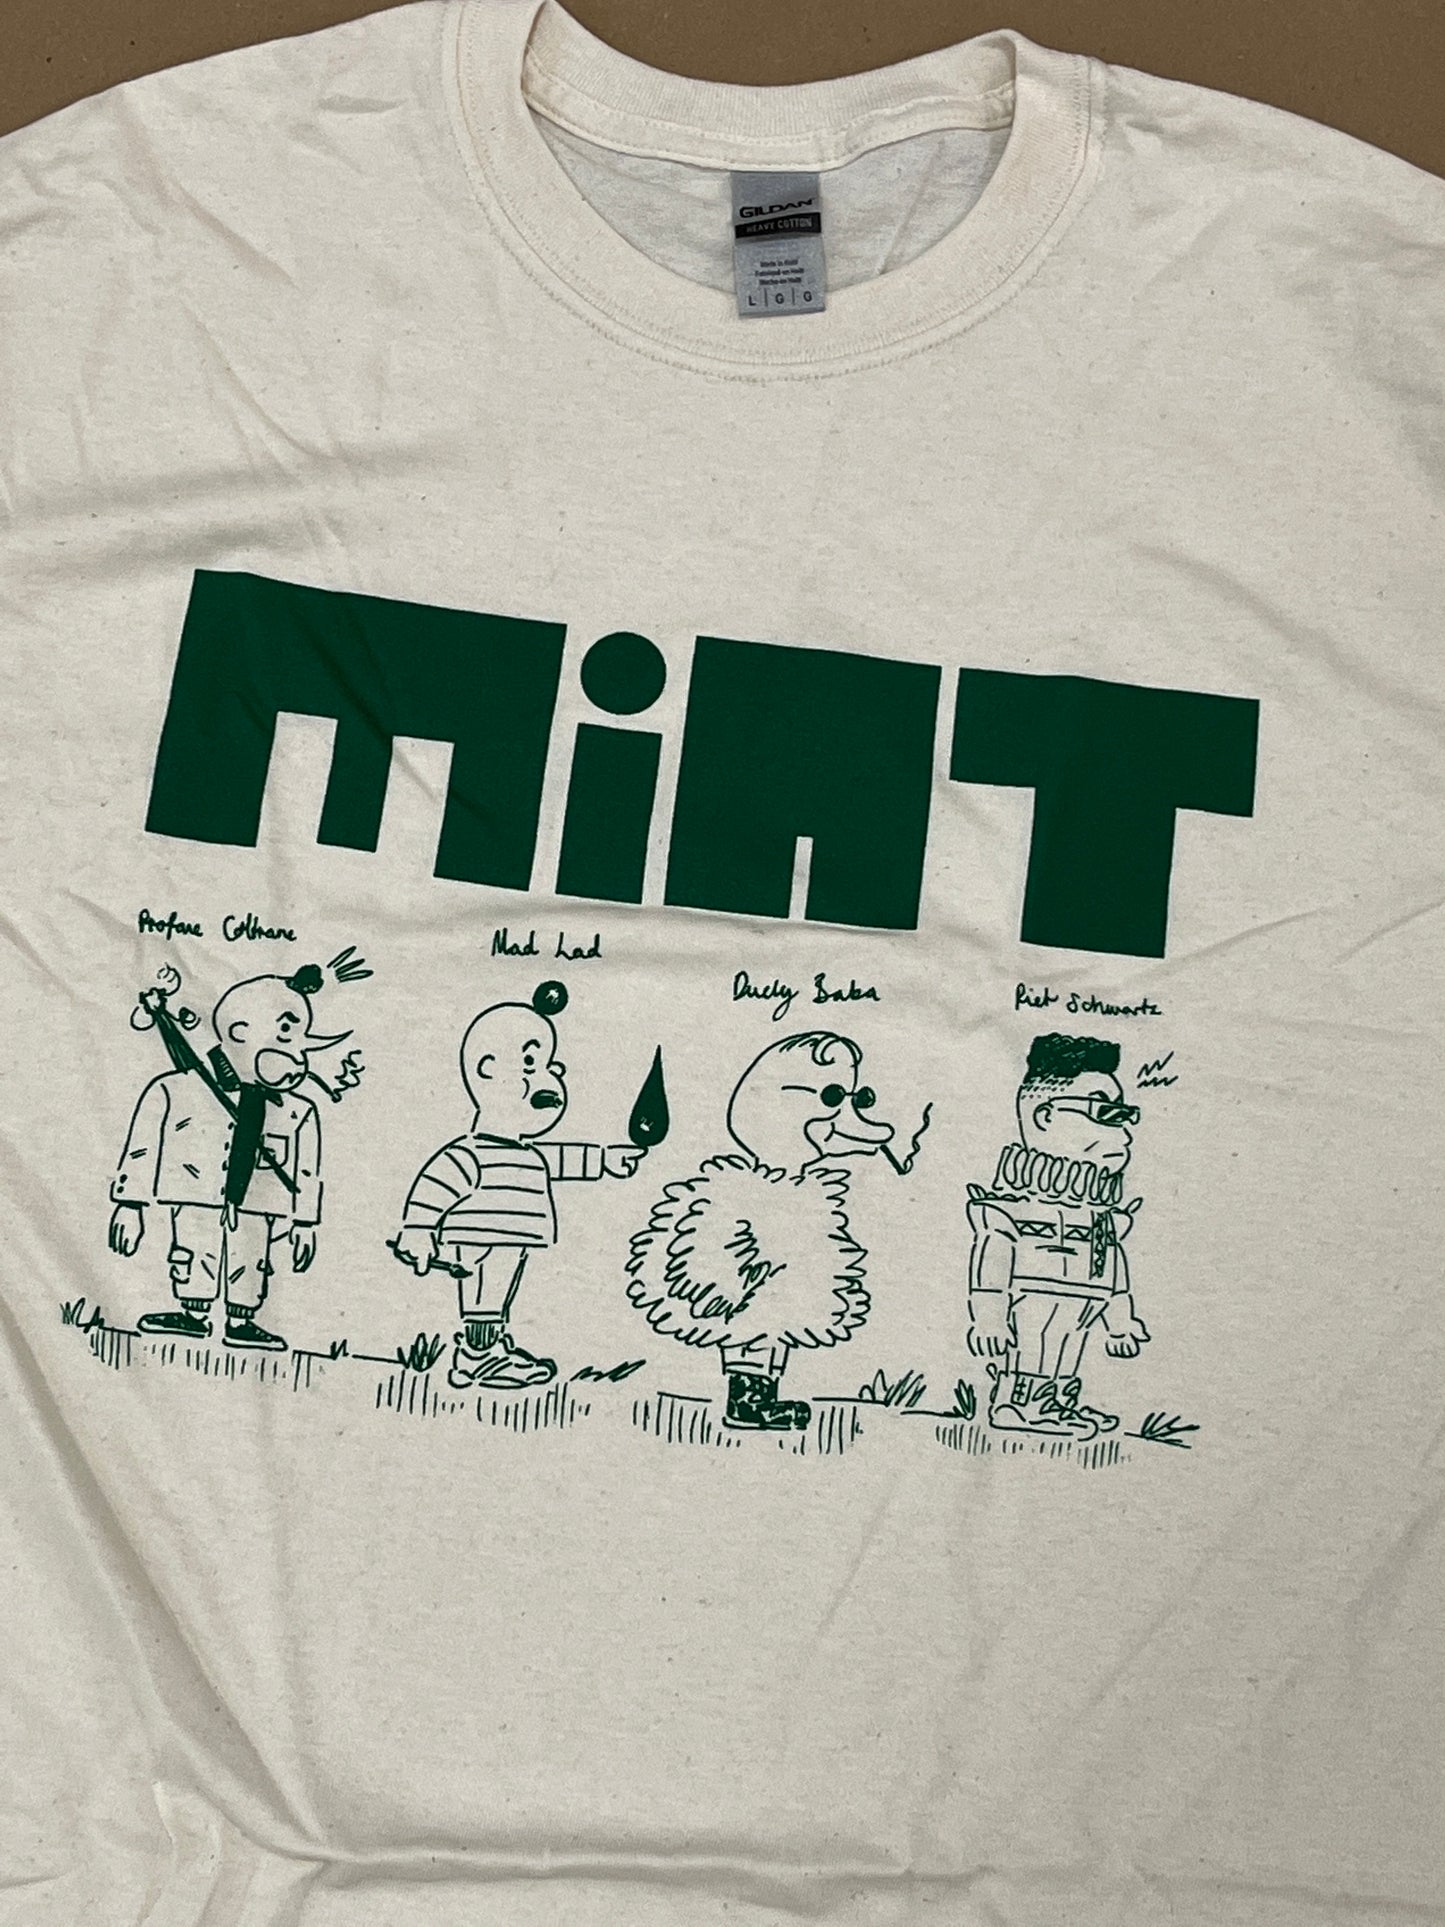 MINT T-Shirt by Michael Kennedy